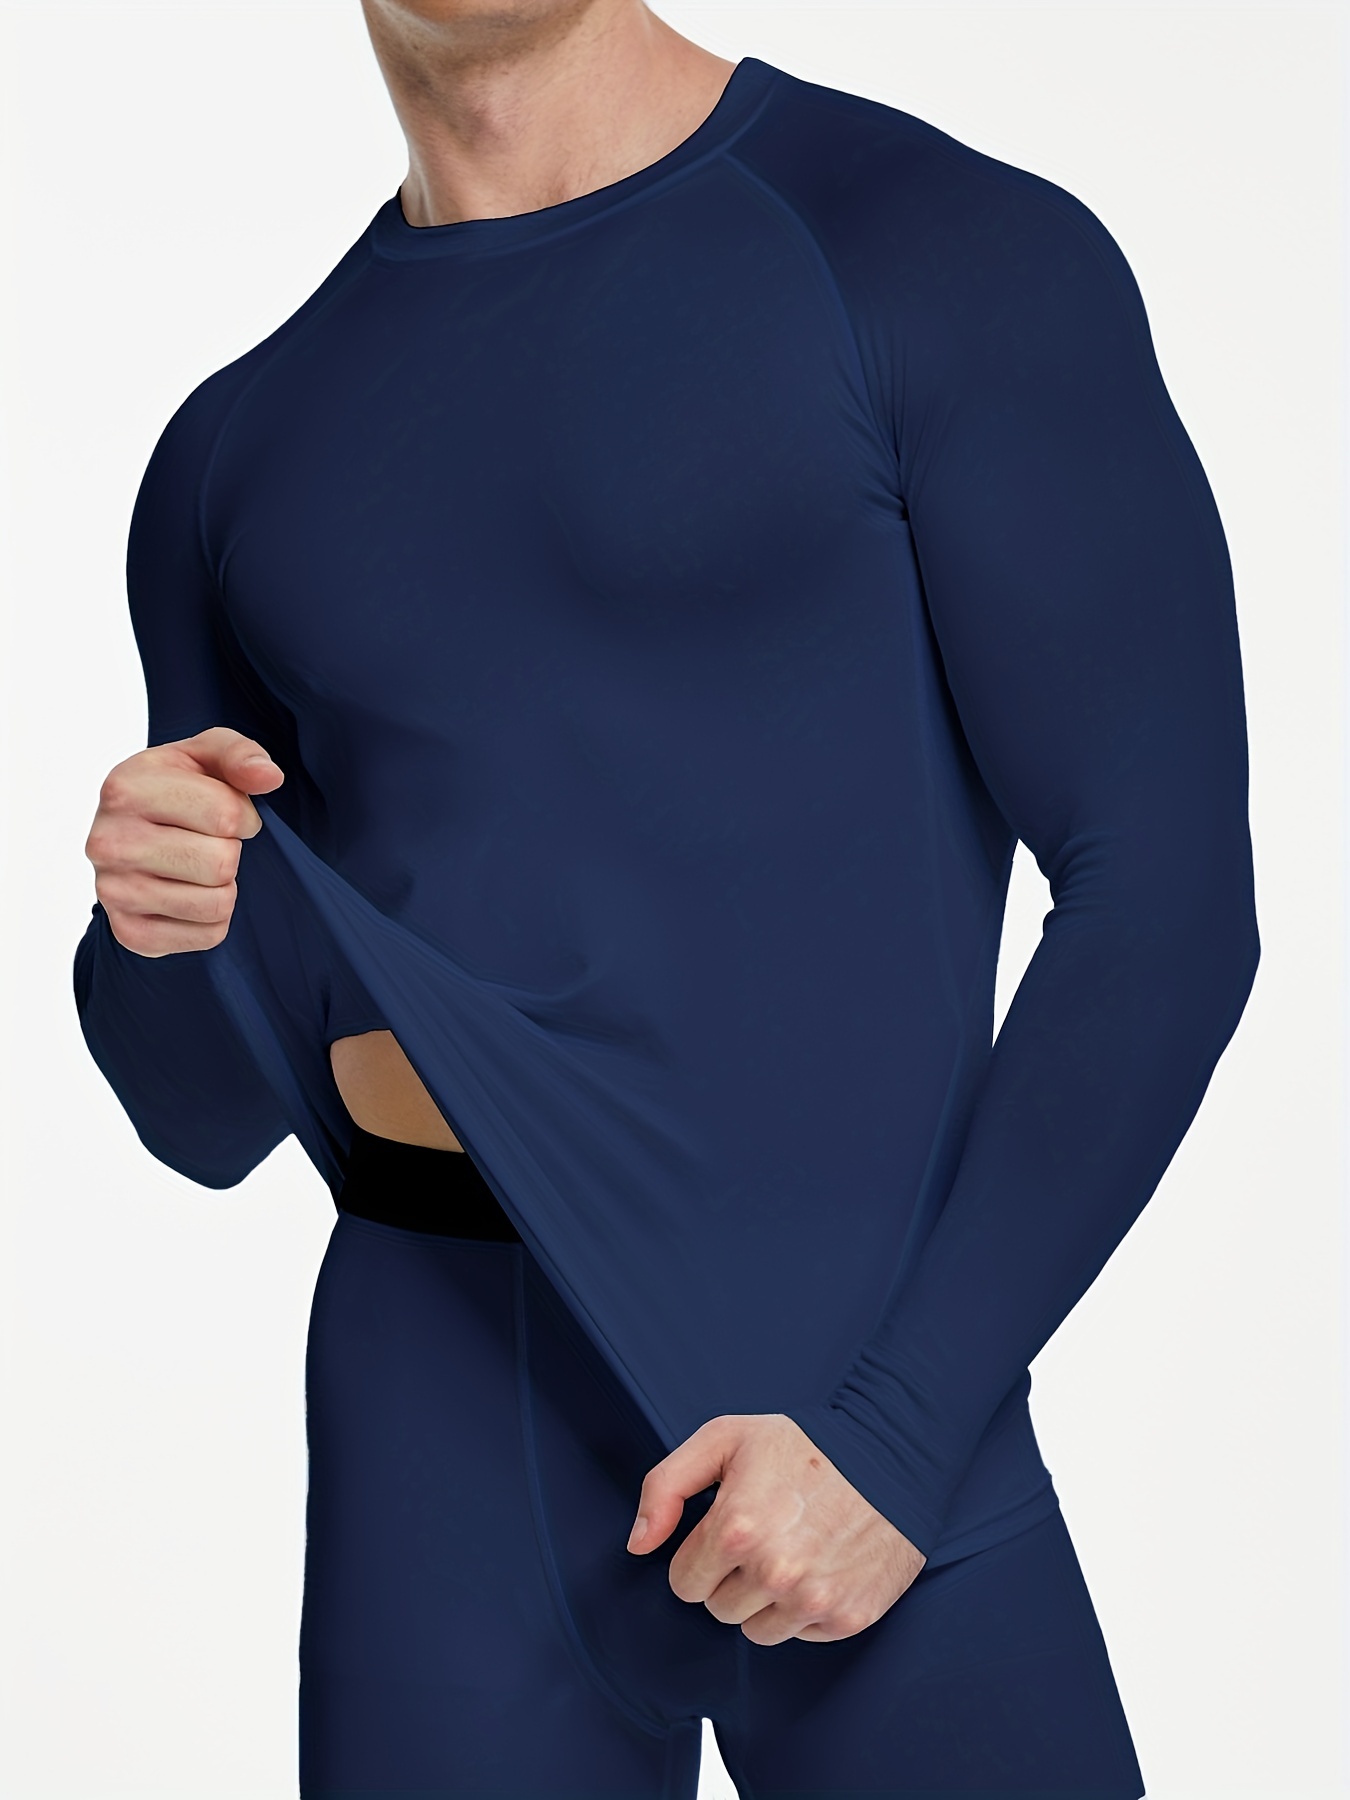 Men's Compression Long Sleeve Shirt - Navy Blue